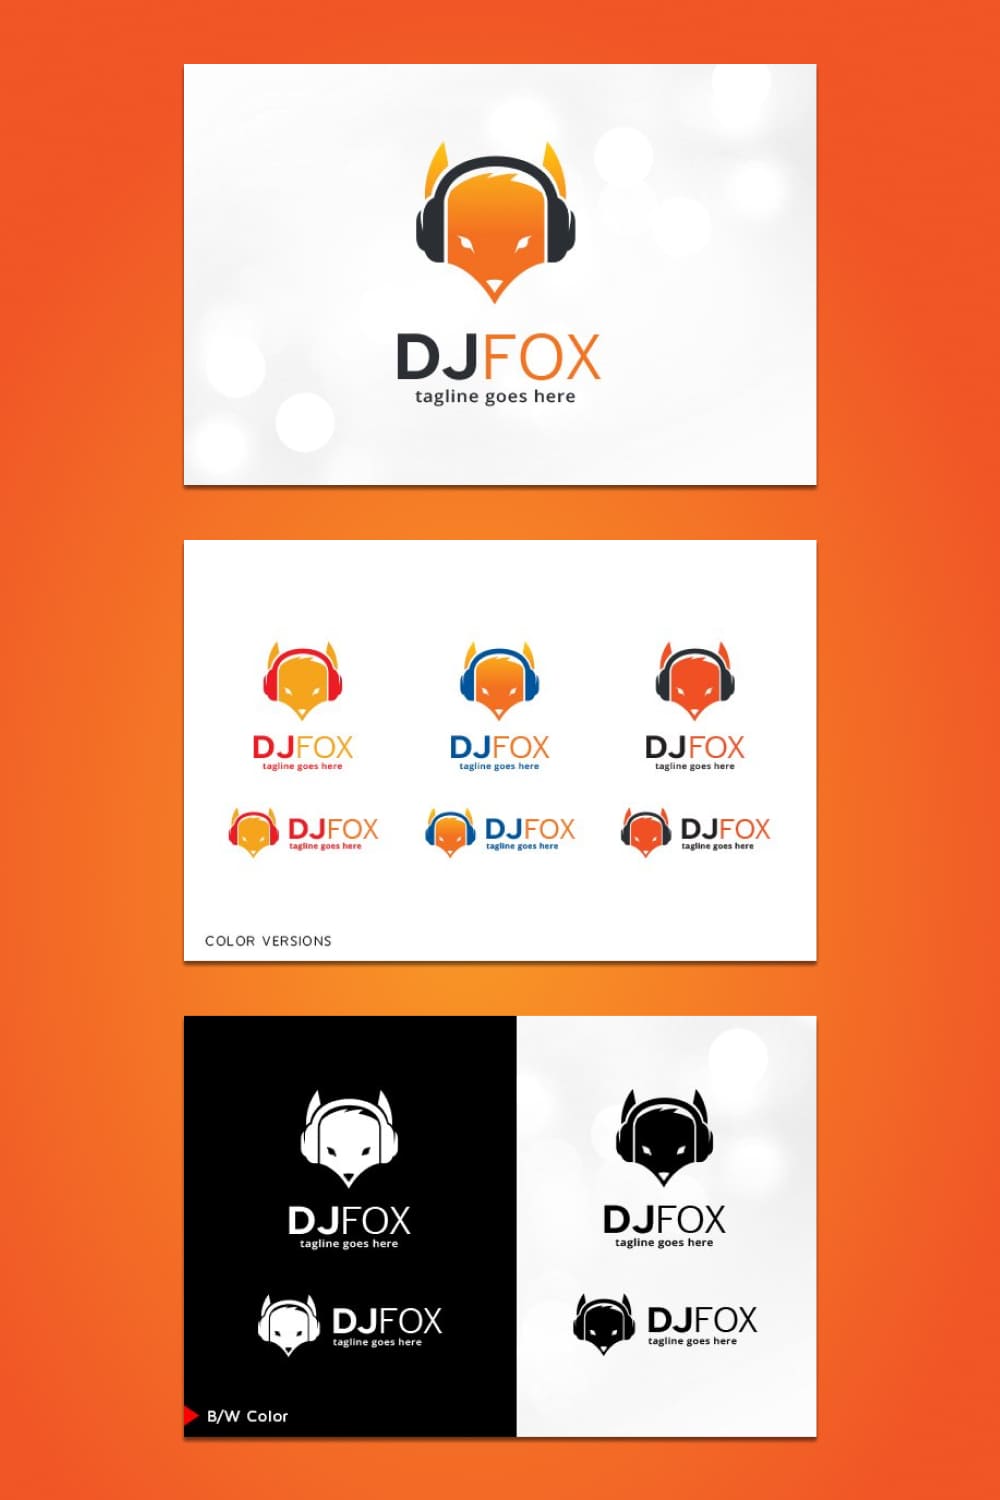 dj fox logo template modern style.